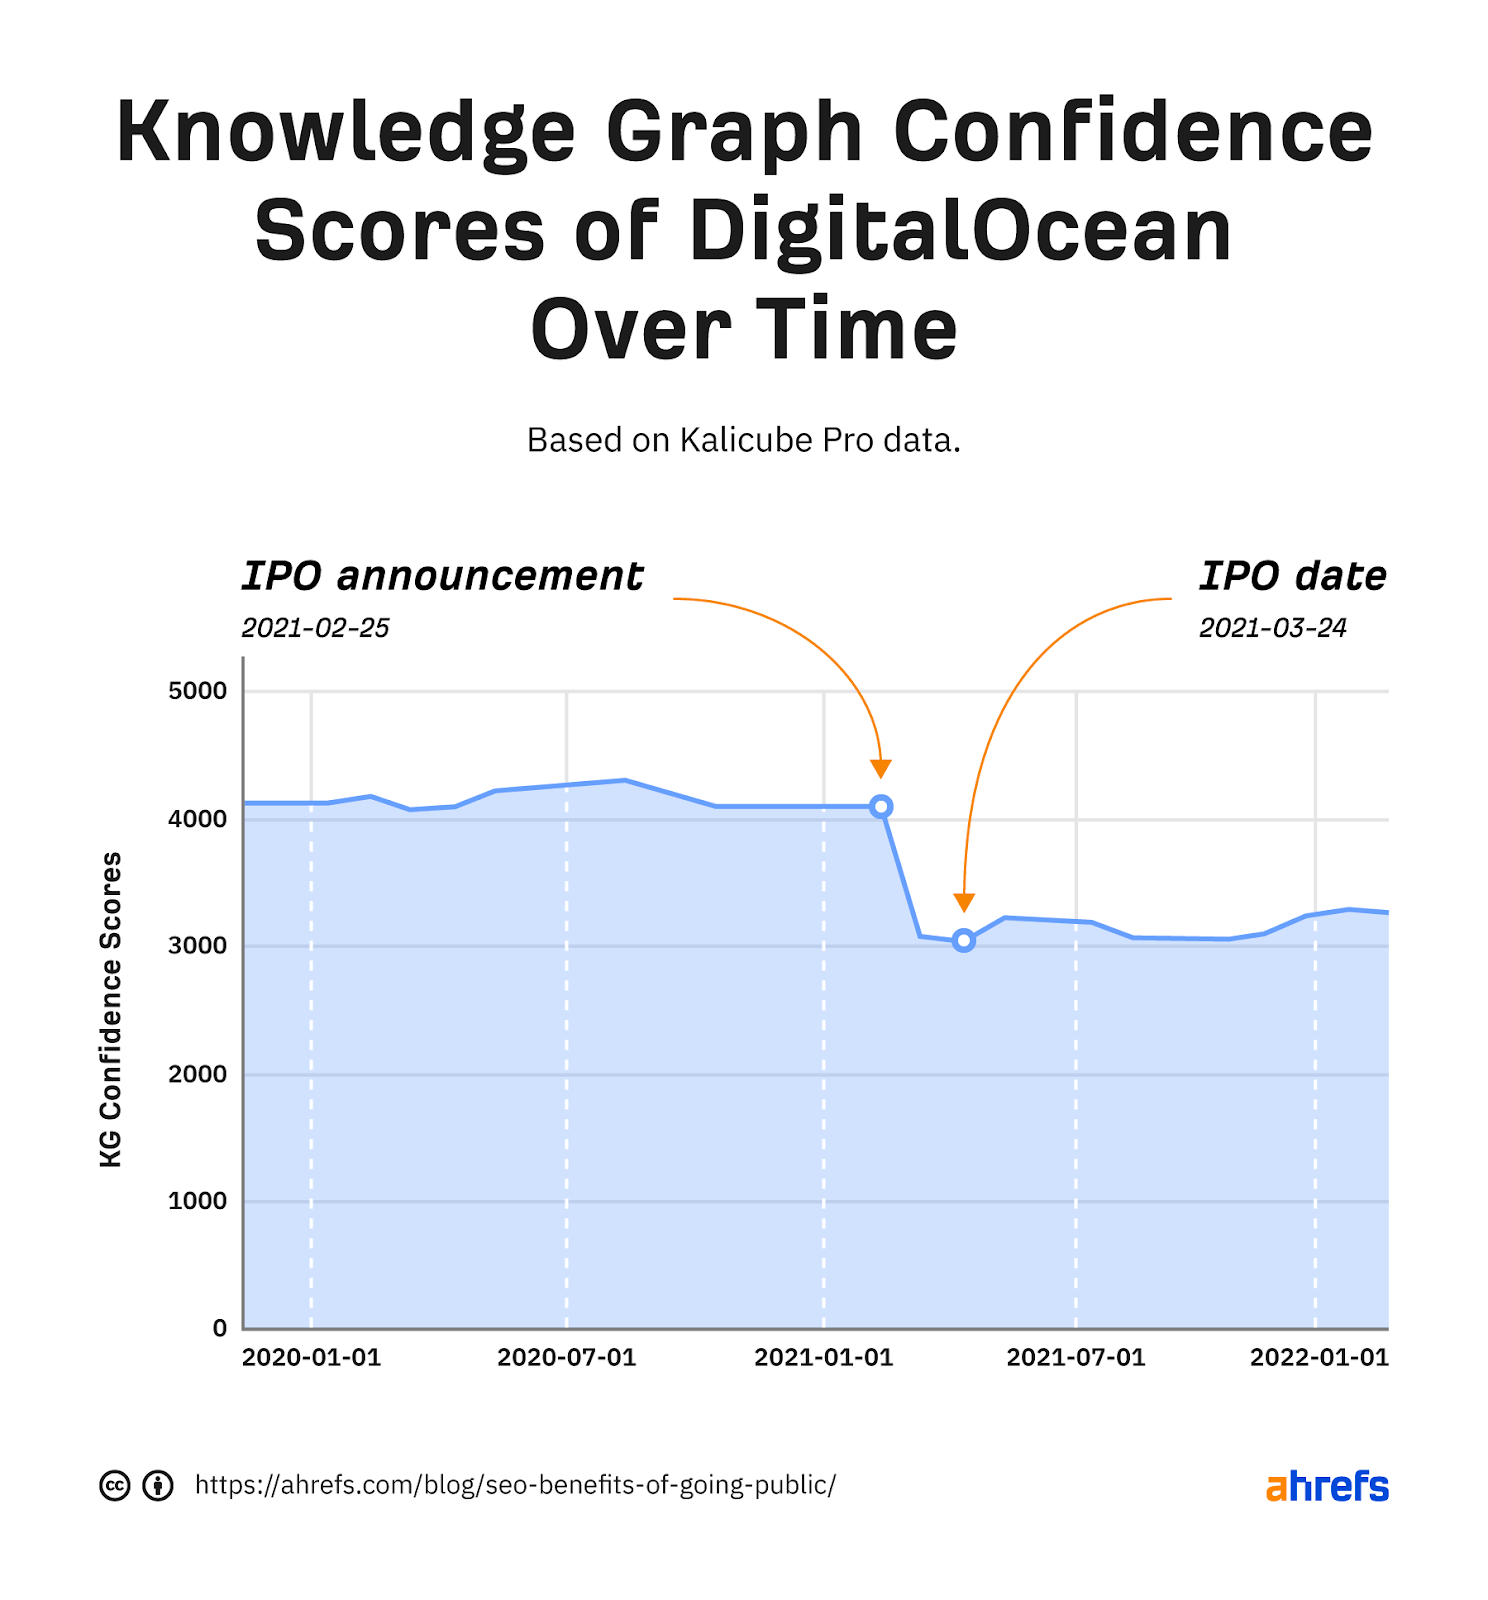 Area graph showing KG confidence score drops after IPO announcement 